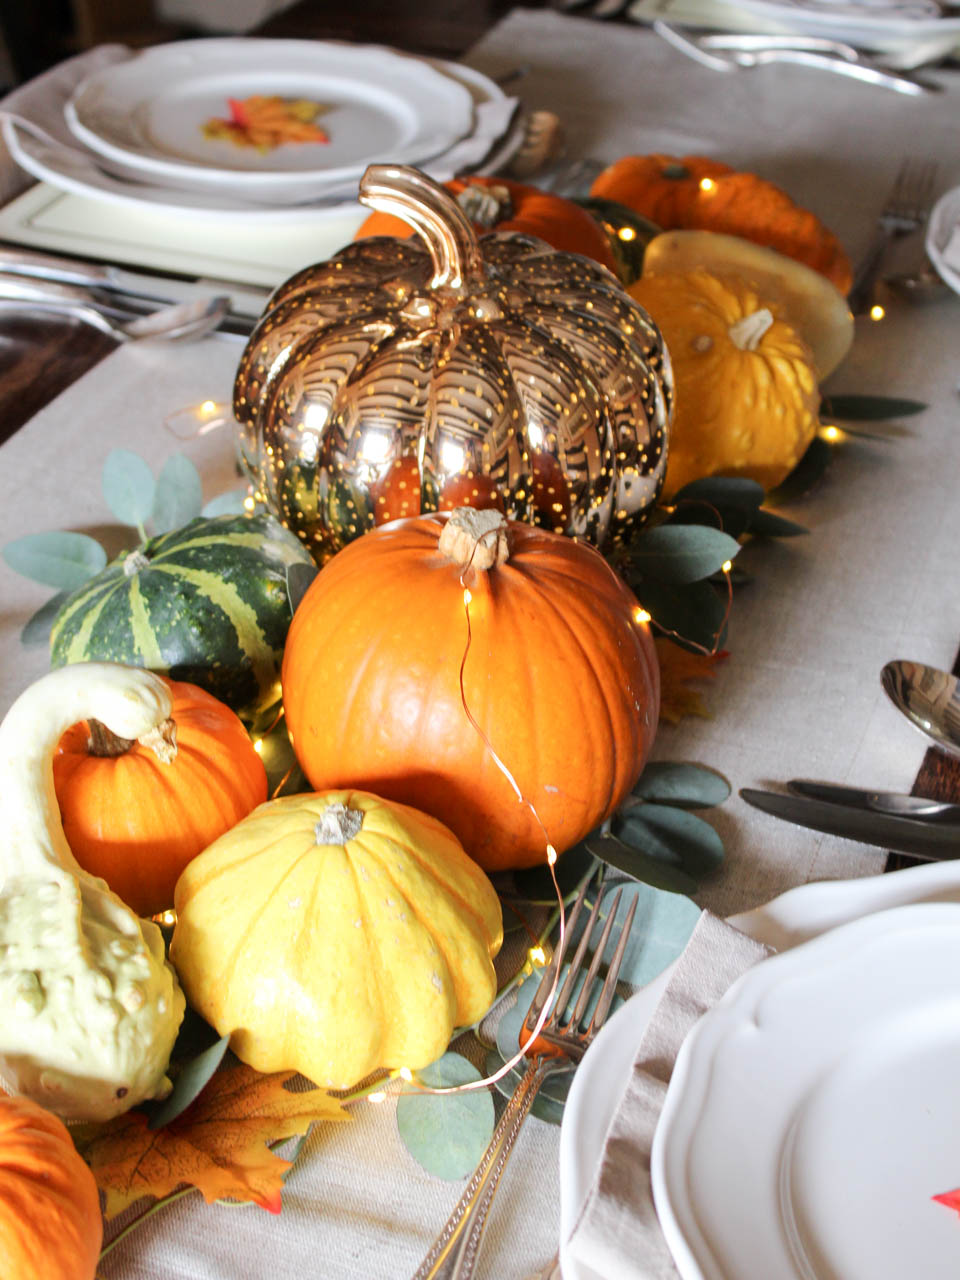 Autumn harvest table setting